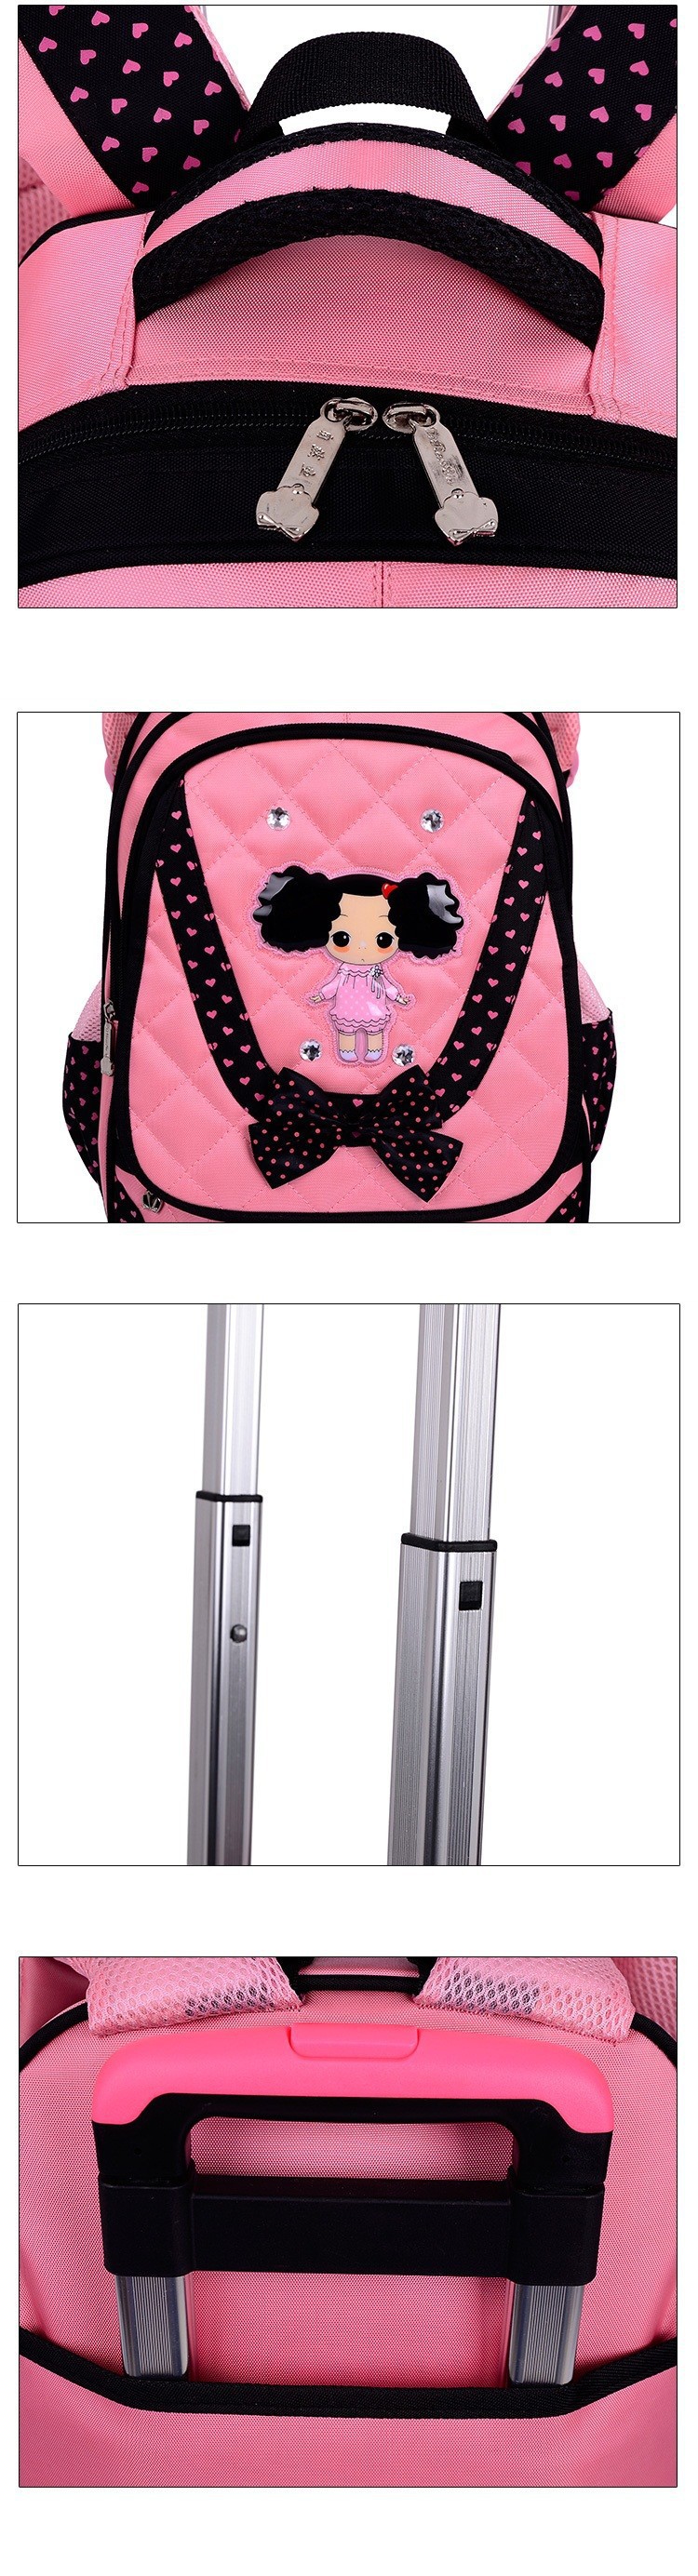 kids-wheeled-school-backpack-children-school-trolley-backpack-carton-pattern-rolling-luggage-kids-detachable-and-orthopedic-6